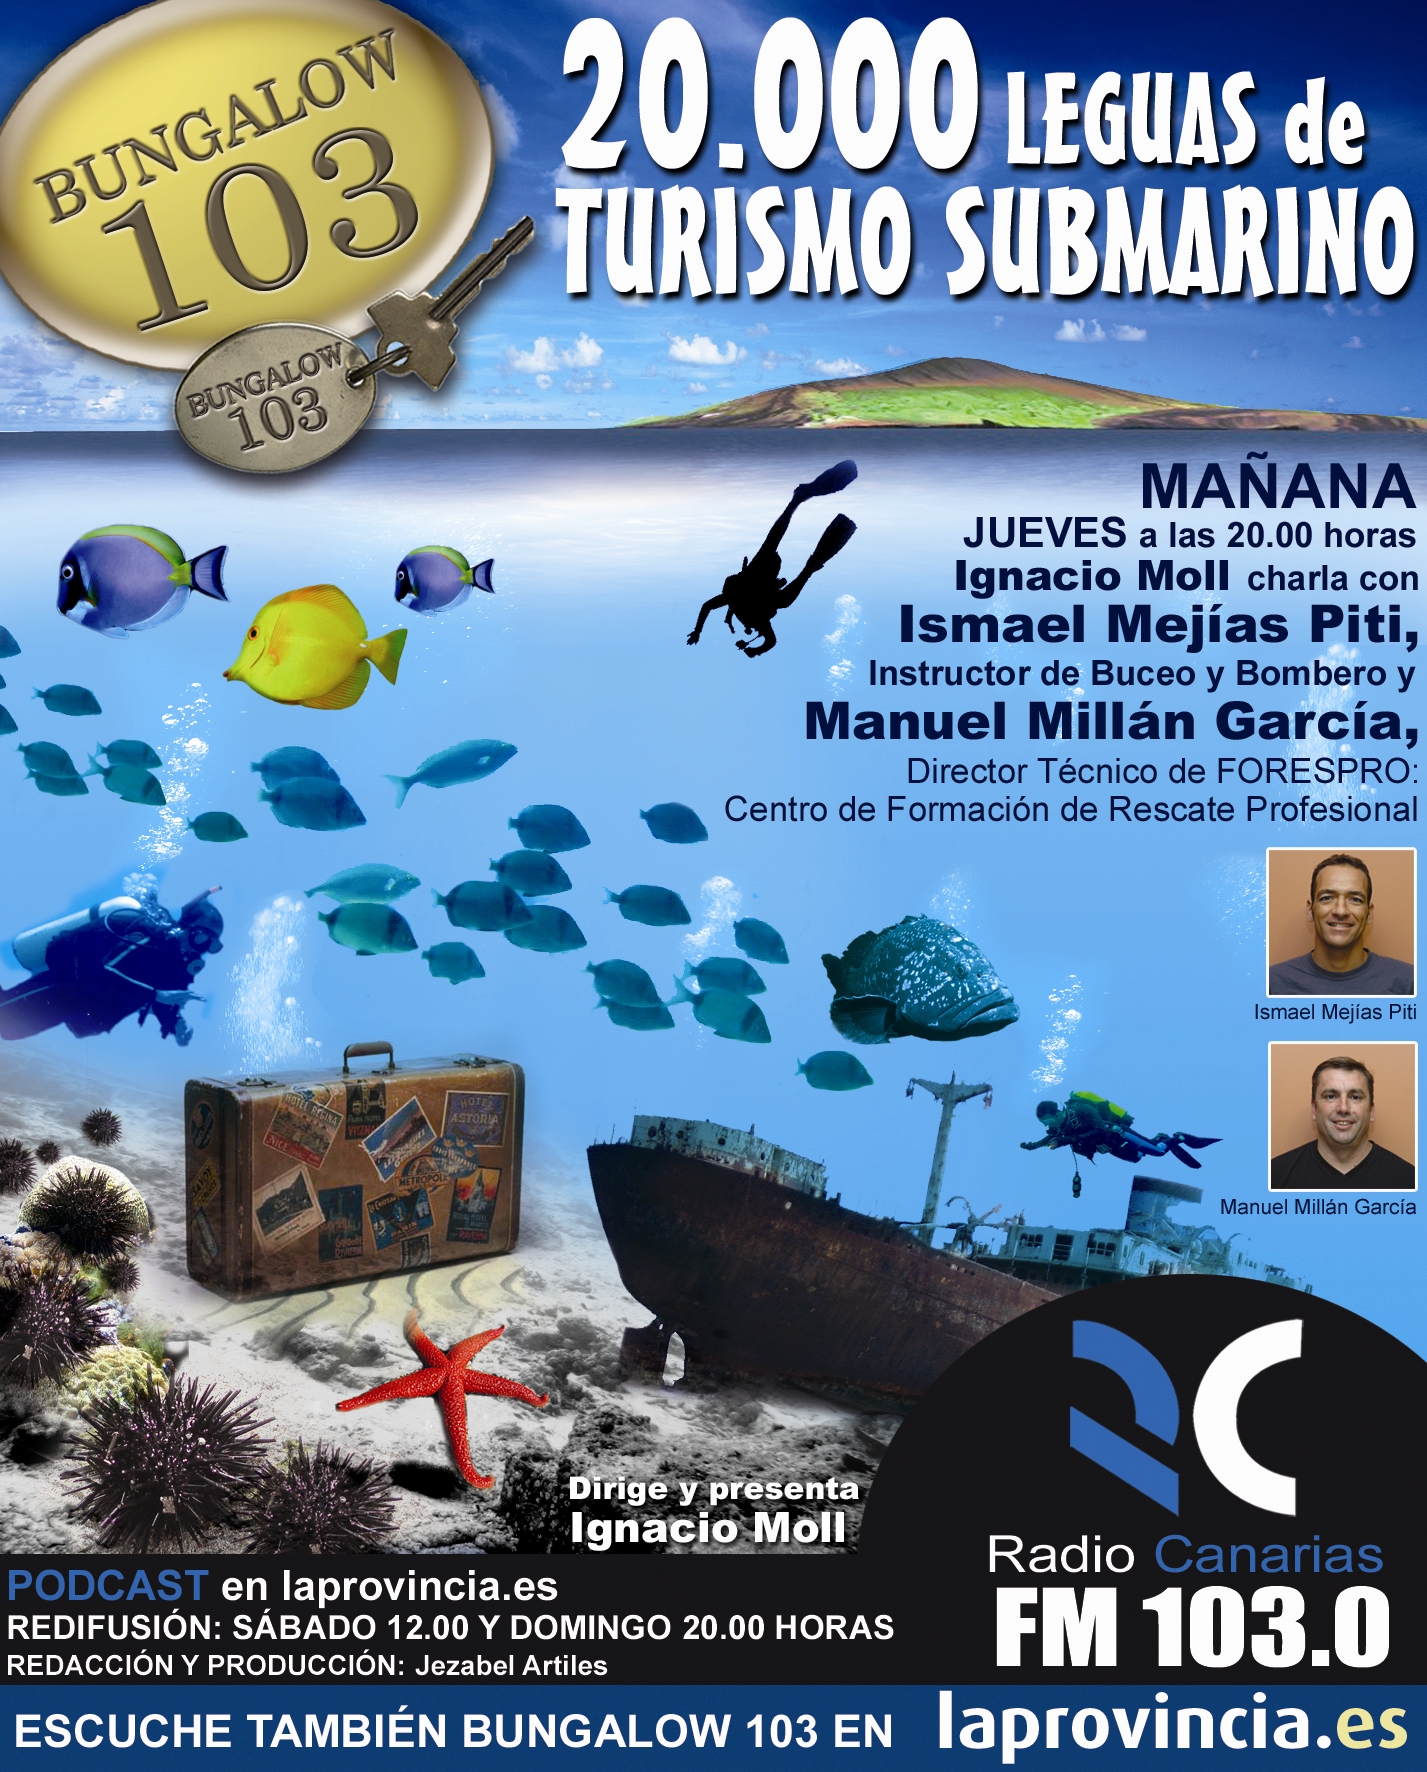 20.000 leguas de turismo submarino